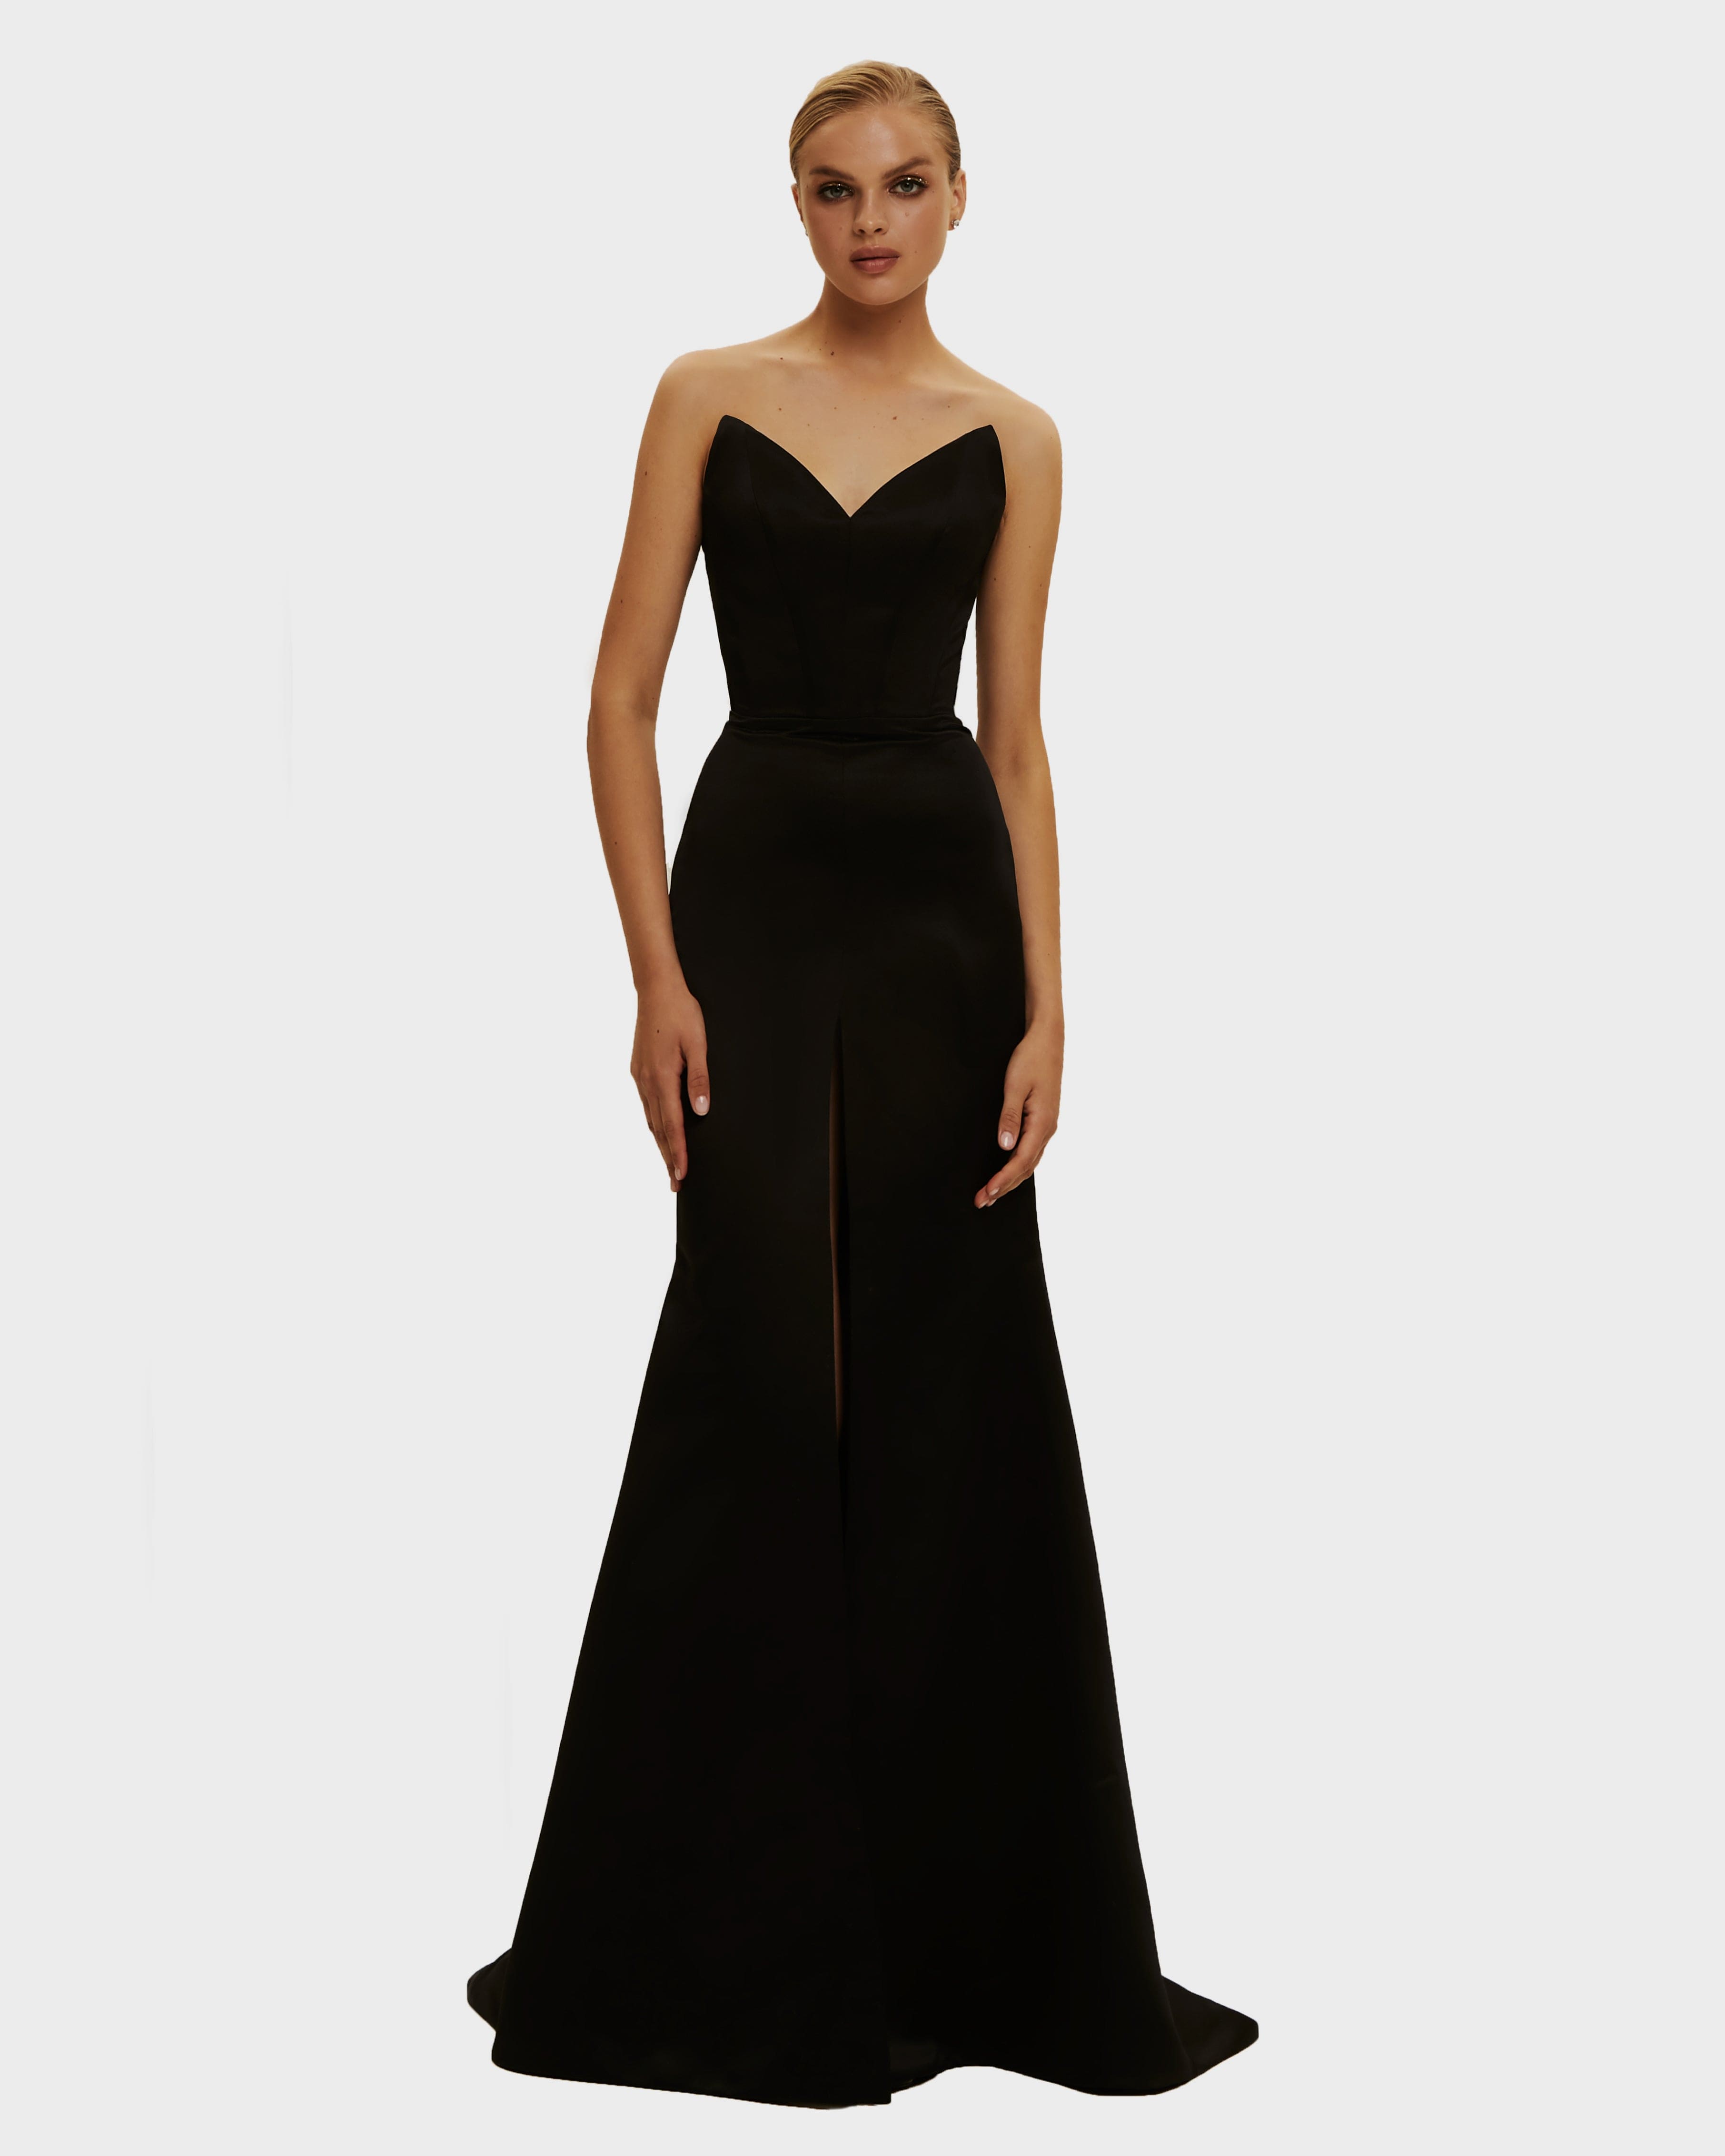  Black Strapless Gown